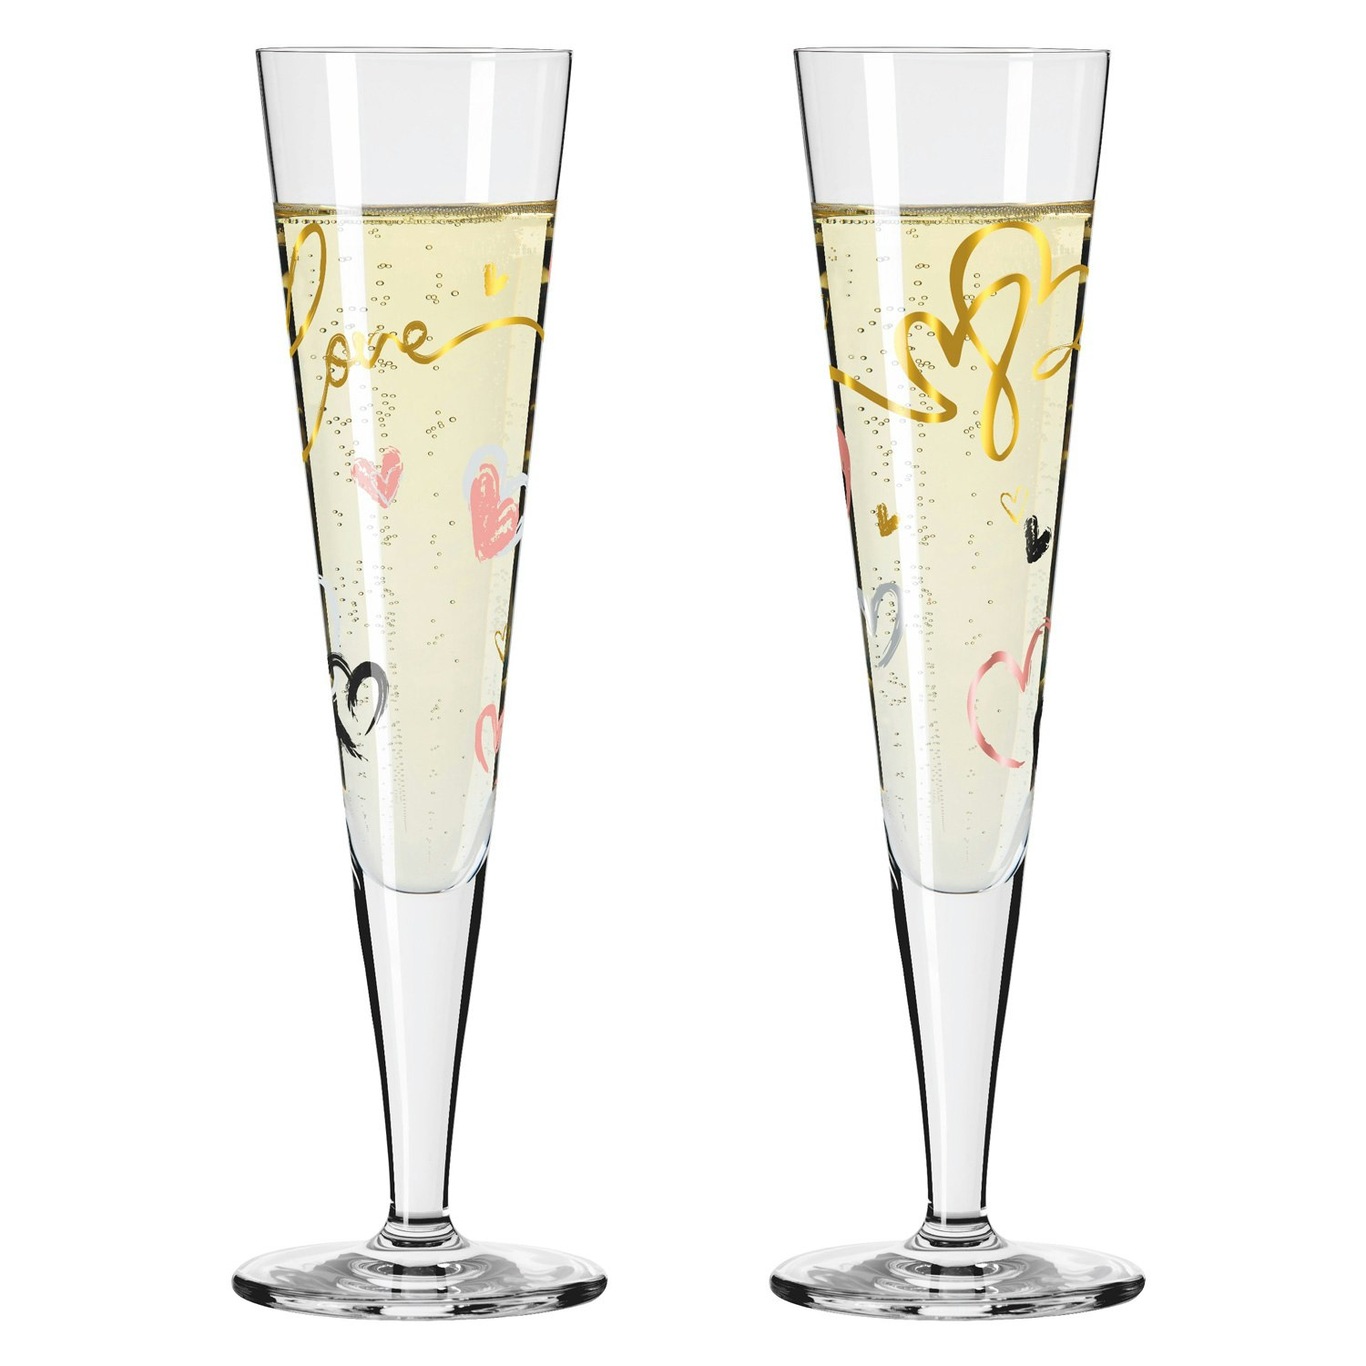 Goldnacht Champagne Glasses 2-pack, H23